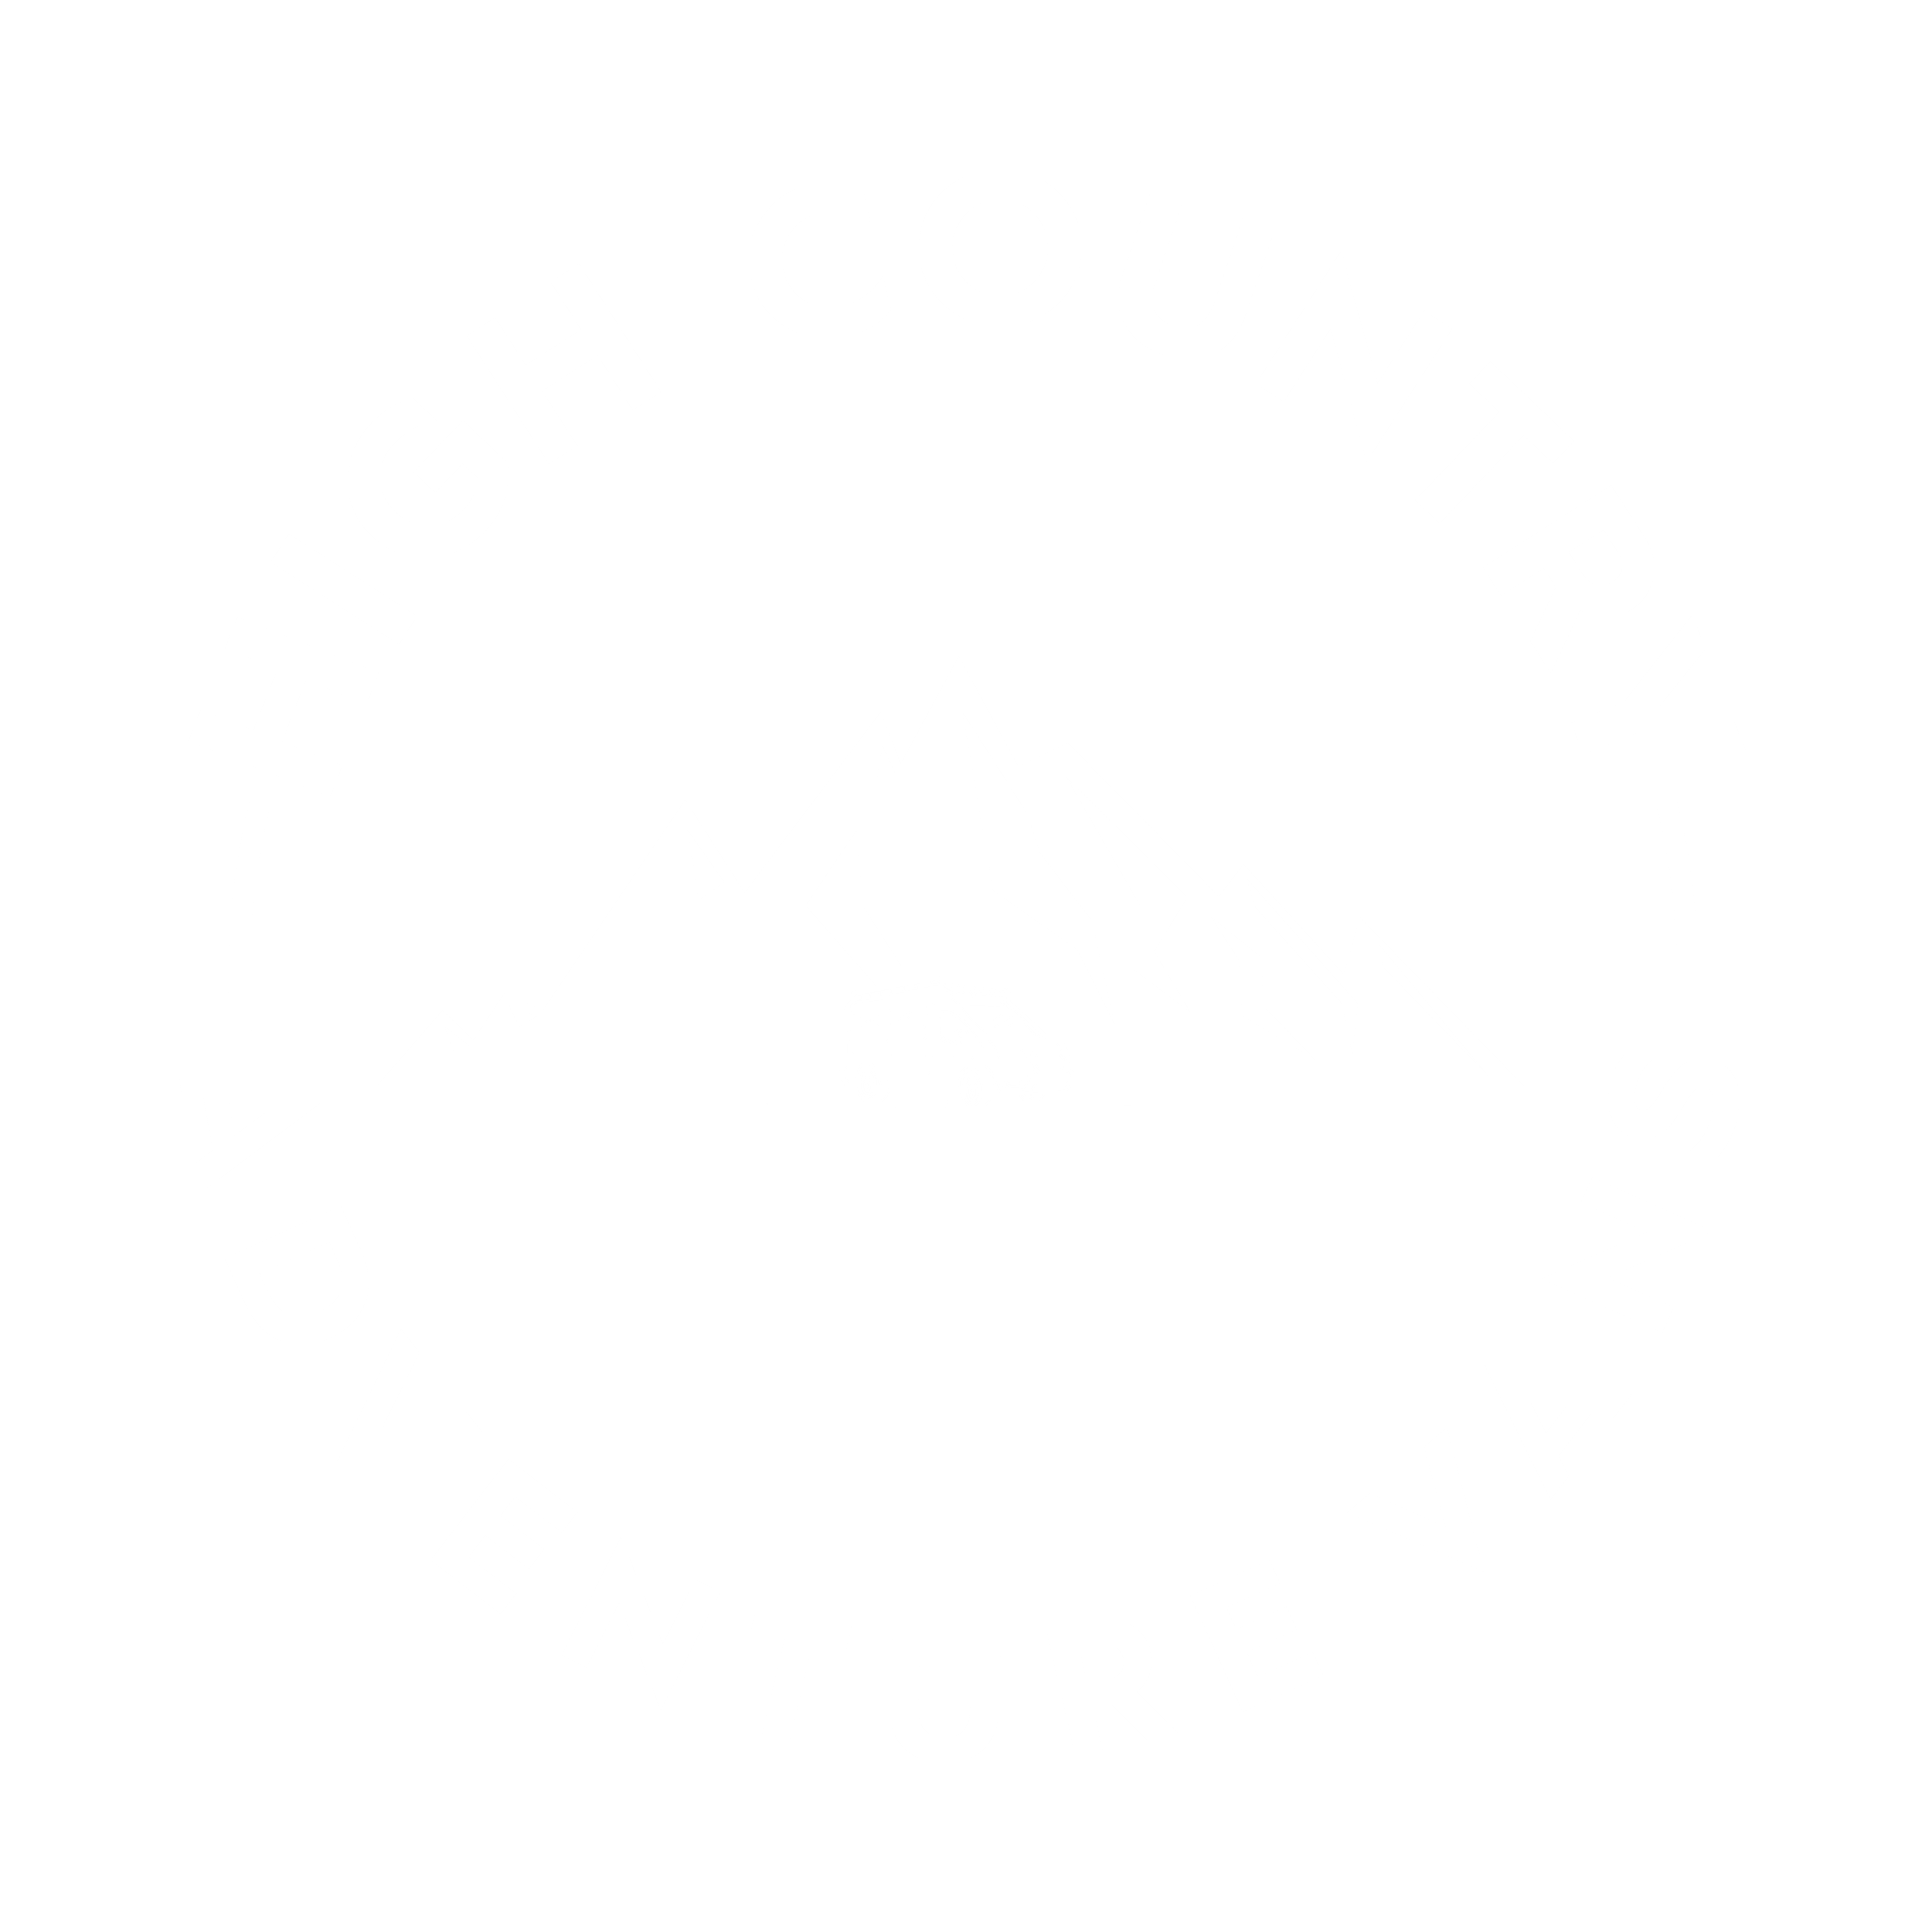 HIGH COUNTRY ADVENTURE VANS LLC